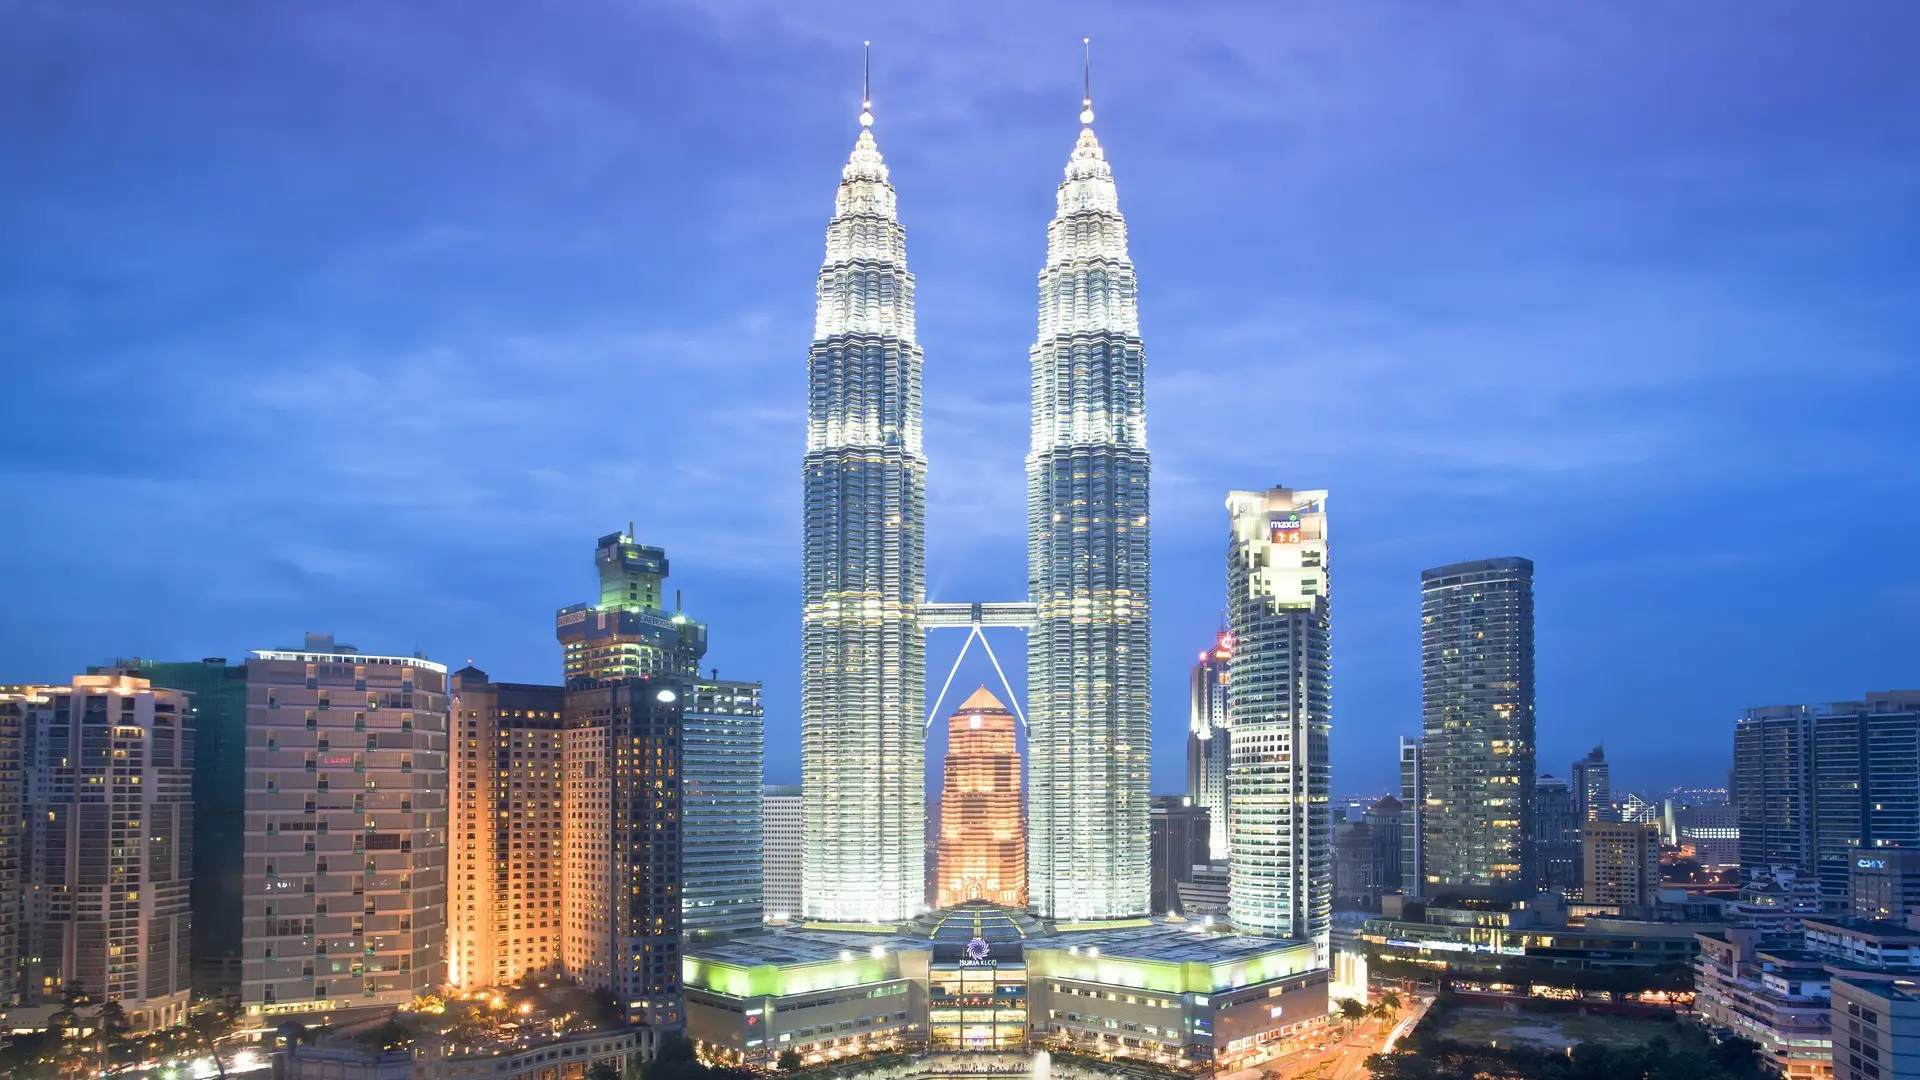 Kuala Lumpur adalah ibu kota Malaysia, sekaligus kota terbesar di negara ini